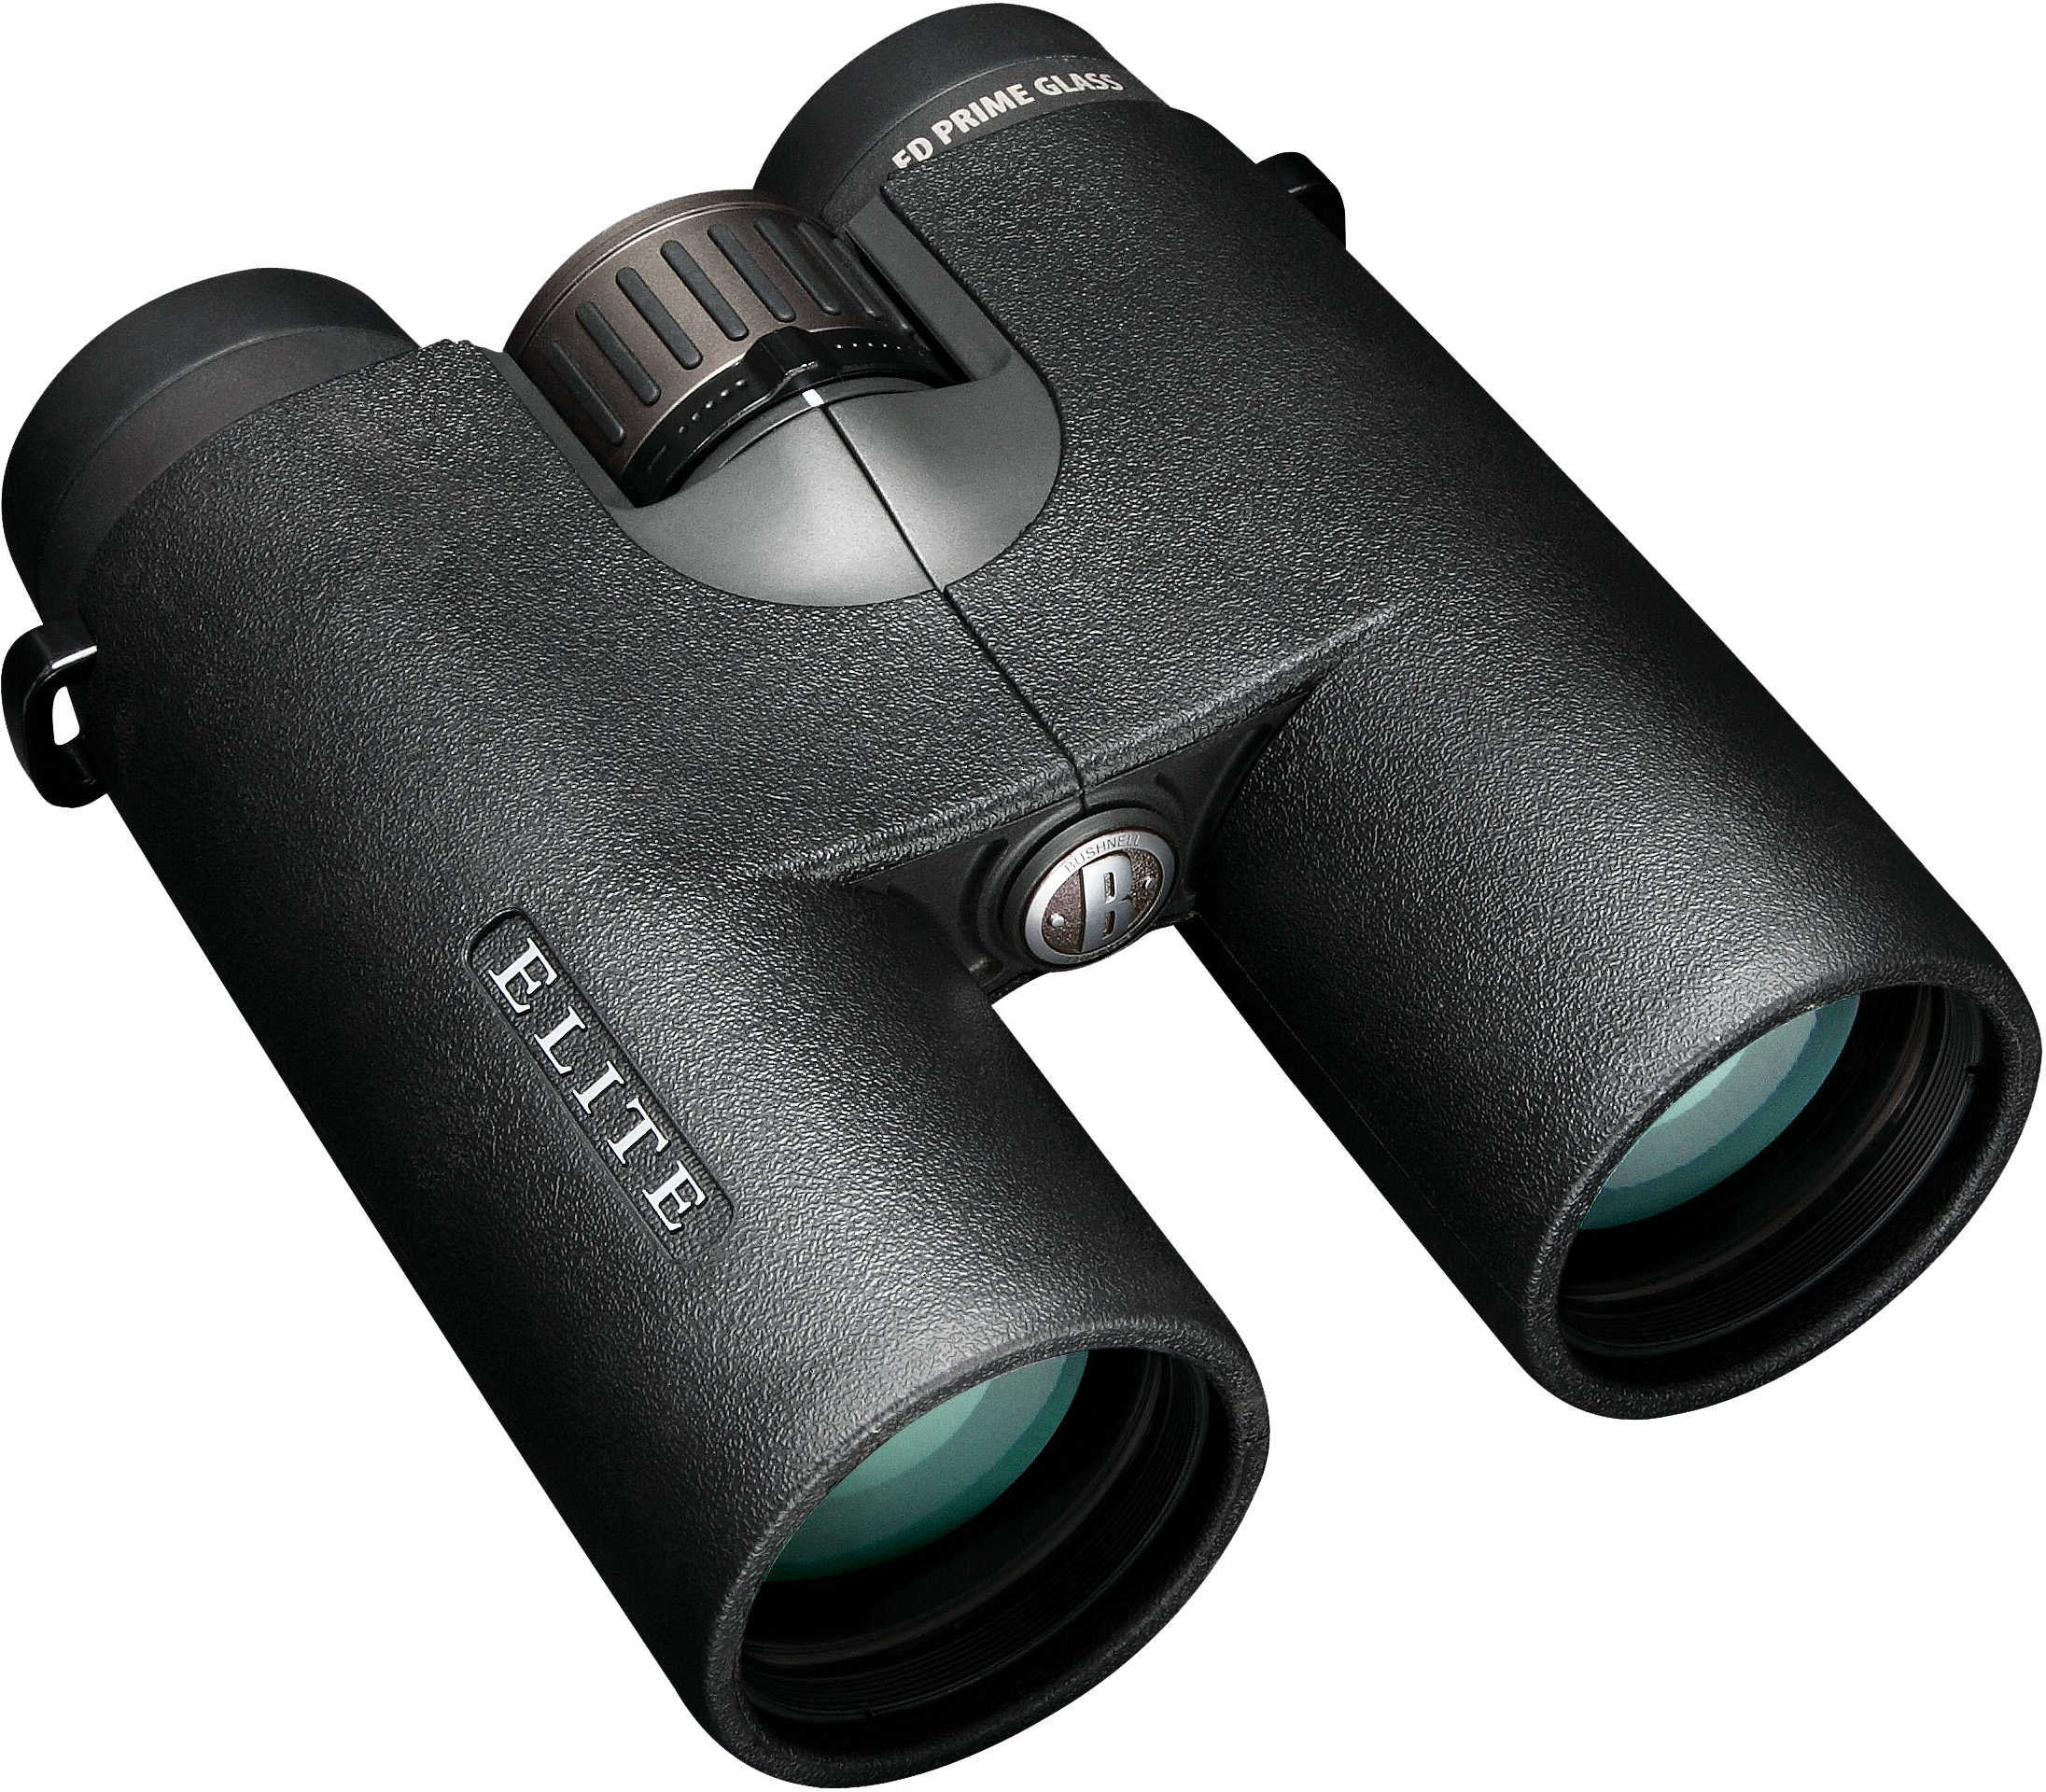 Bushnell Elite Binoculars 10x42mm Black, Roff Prism, ED Glass 620142ED